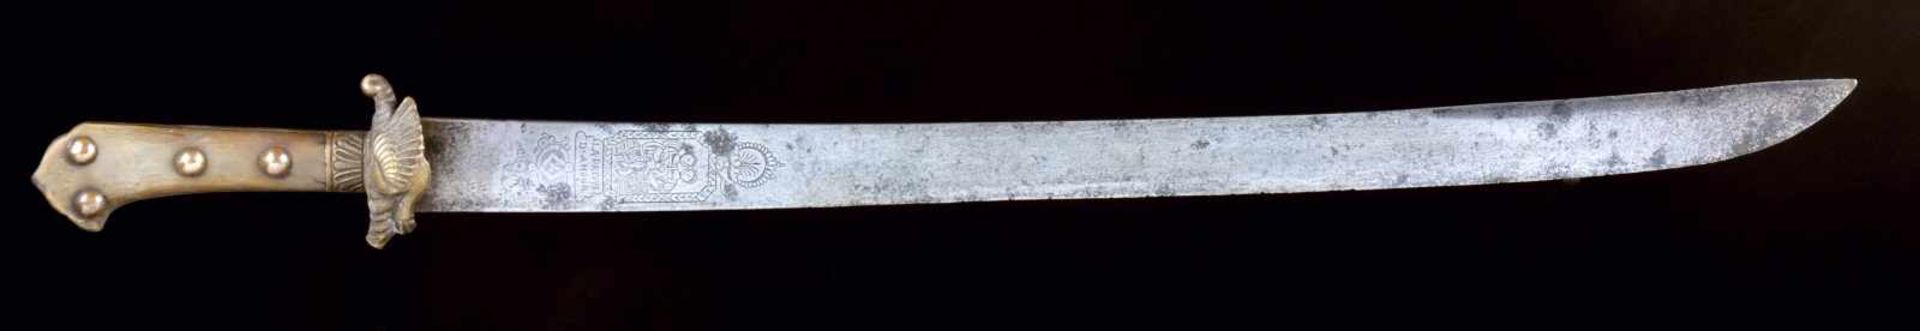 RARE PANDUR STYLE HUNTING DAGGER WITH ENGRAVED BLADE AND KARABELA HILT, WESTERN EUROPE, MIDDLE - Bild 2 aus 9